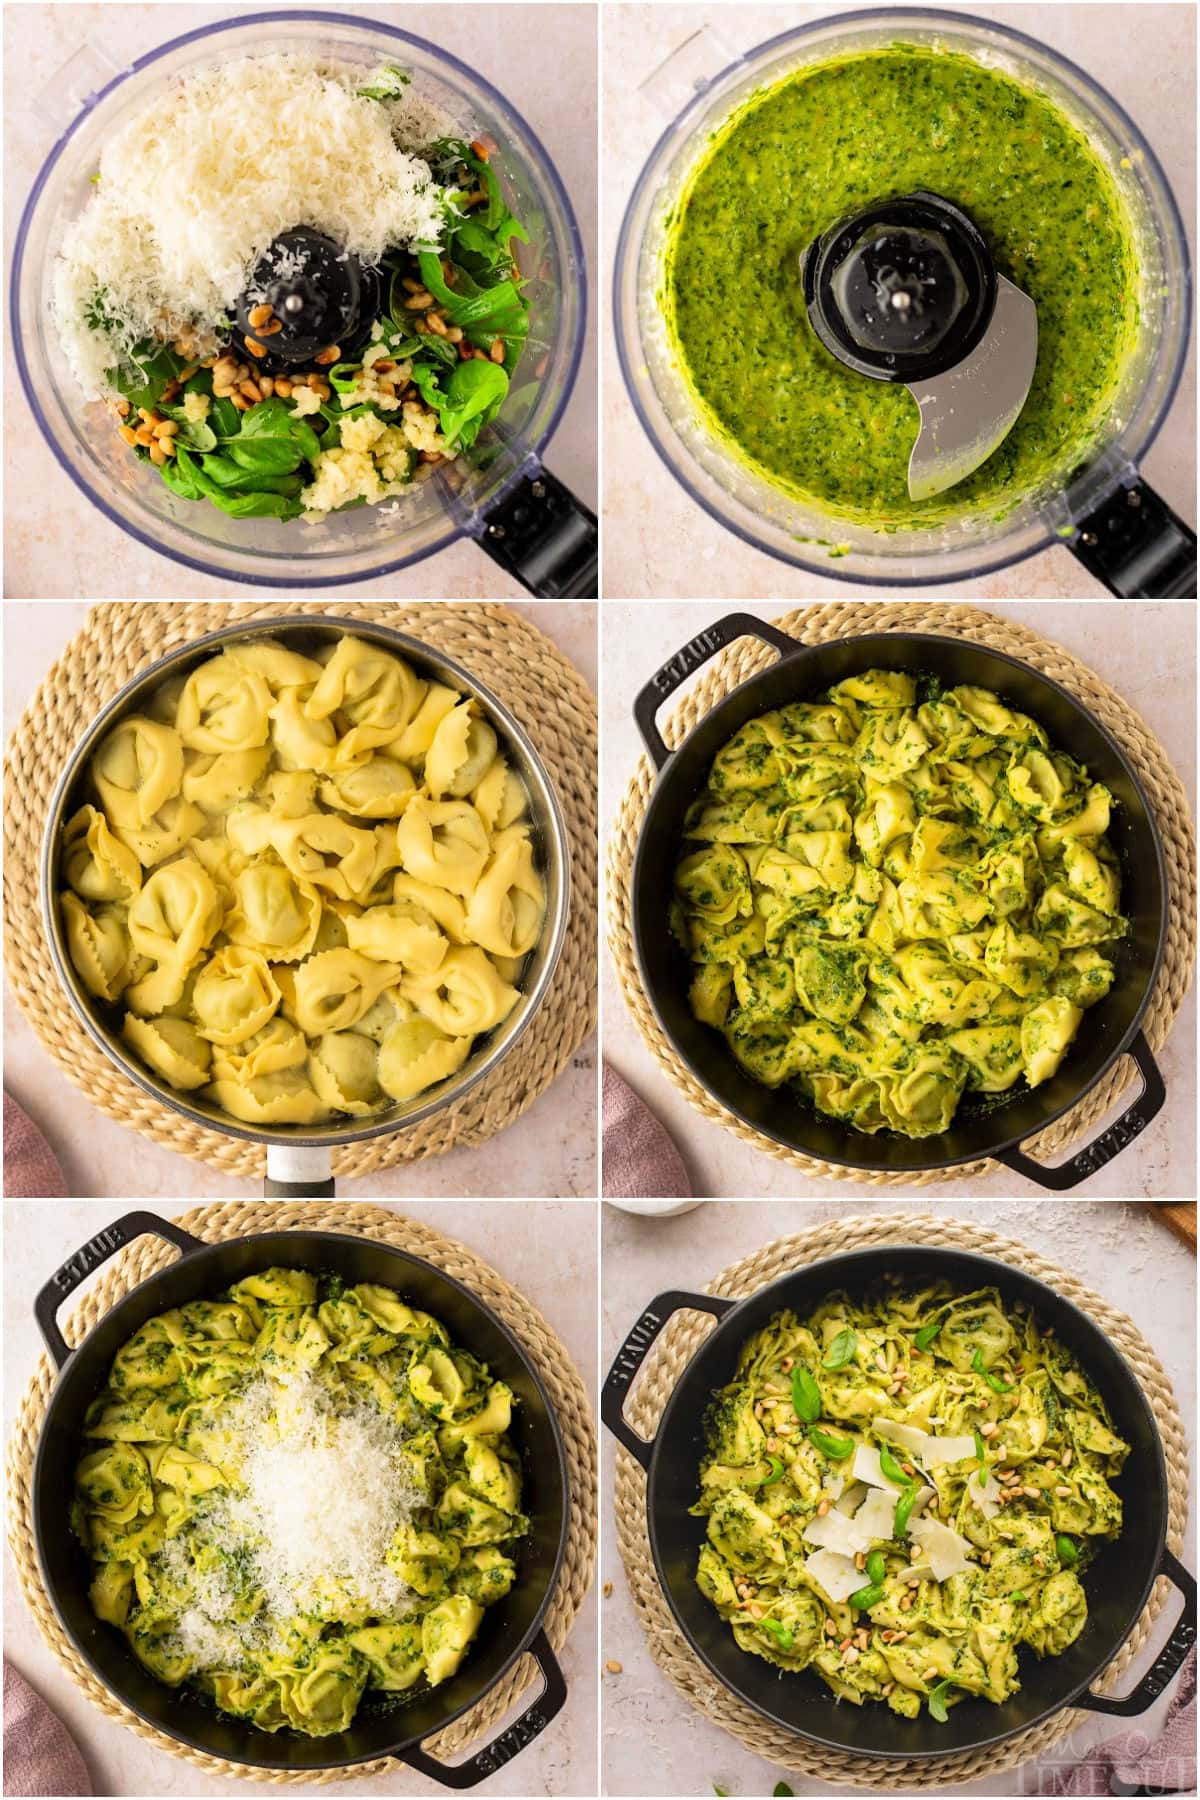 six image collage showing how to make fresh basil pesto and prepare the pesto tortellini.